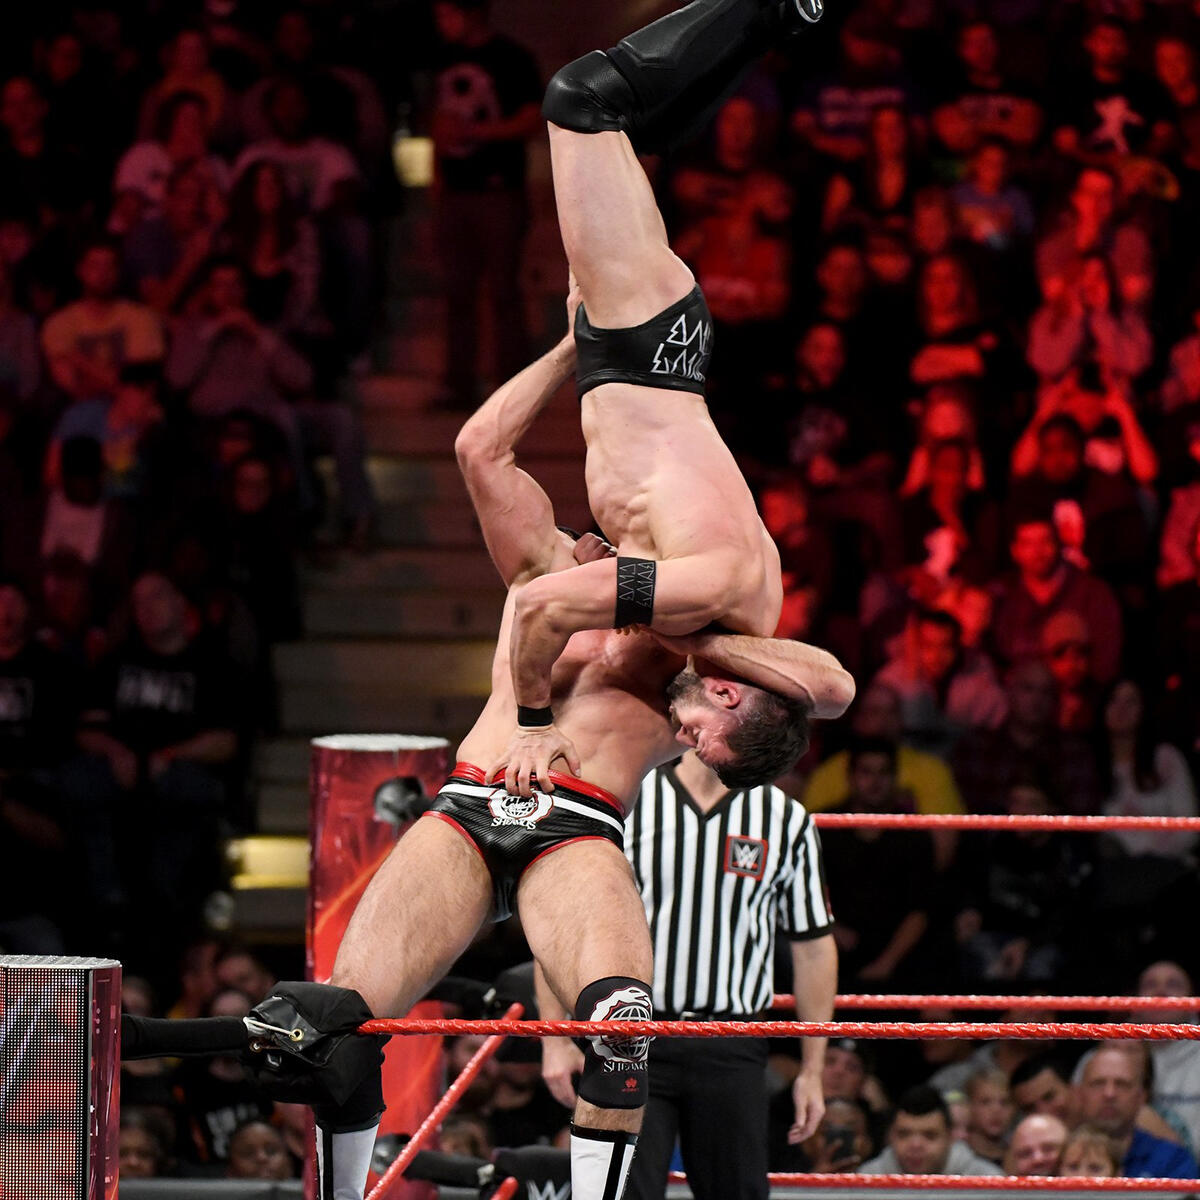 Why do WWE Wrestlers like Finn Balor and Cesaro wear the Kinesio